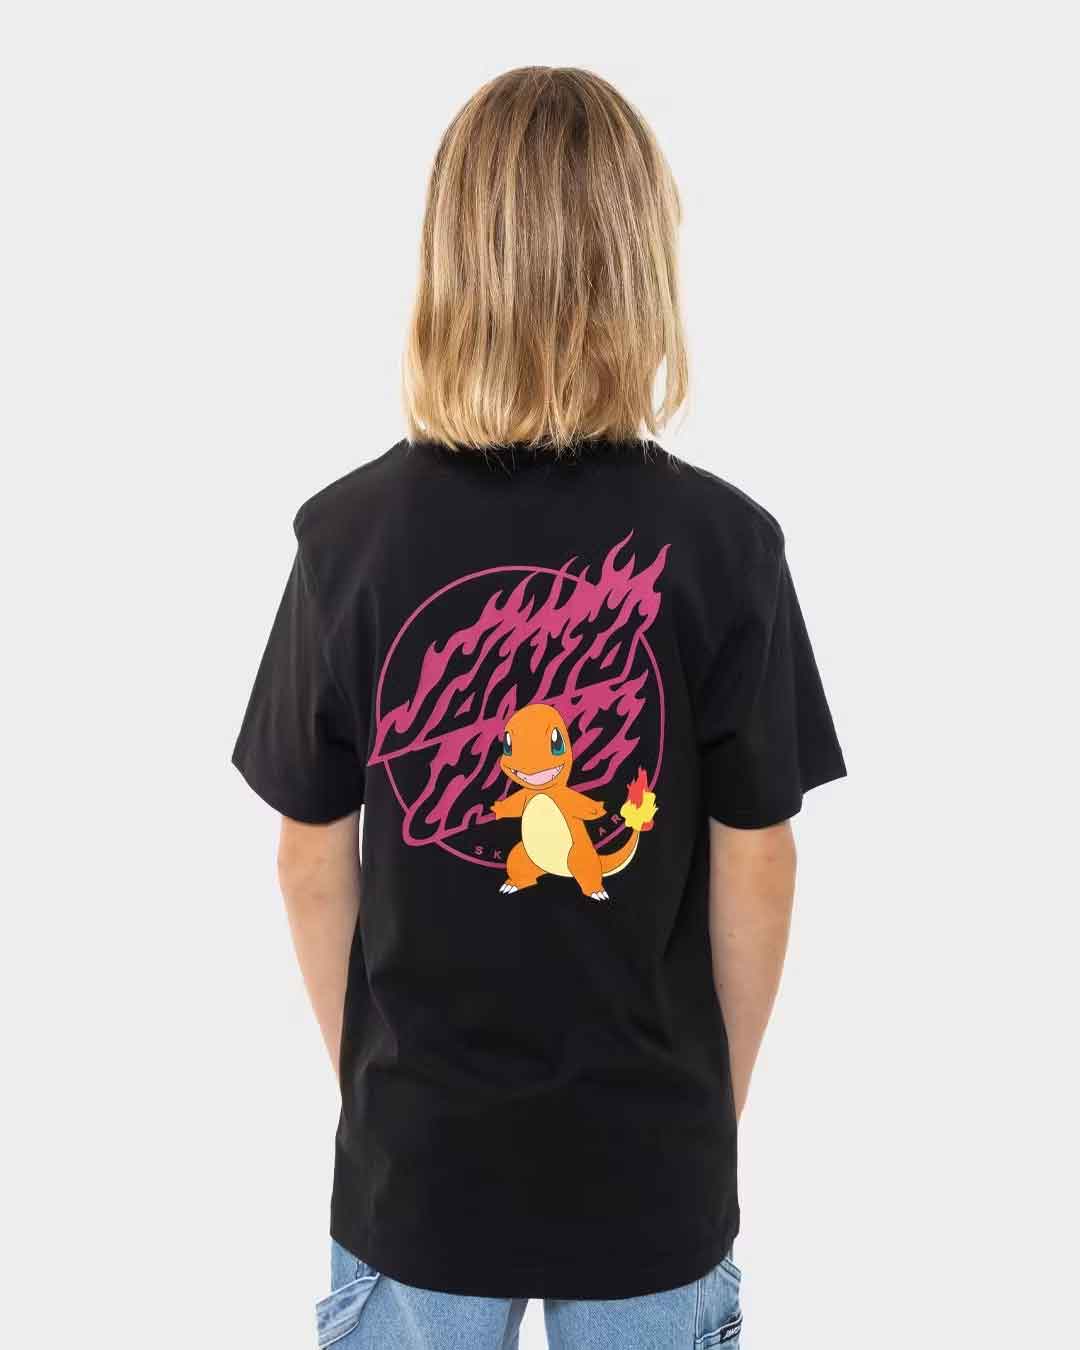 Pokémon Pikachu Fire Type 1 Boys S/S T-Shirt